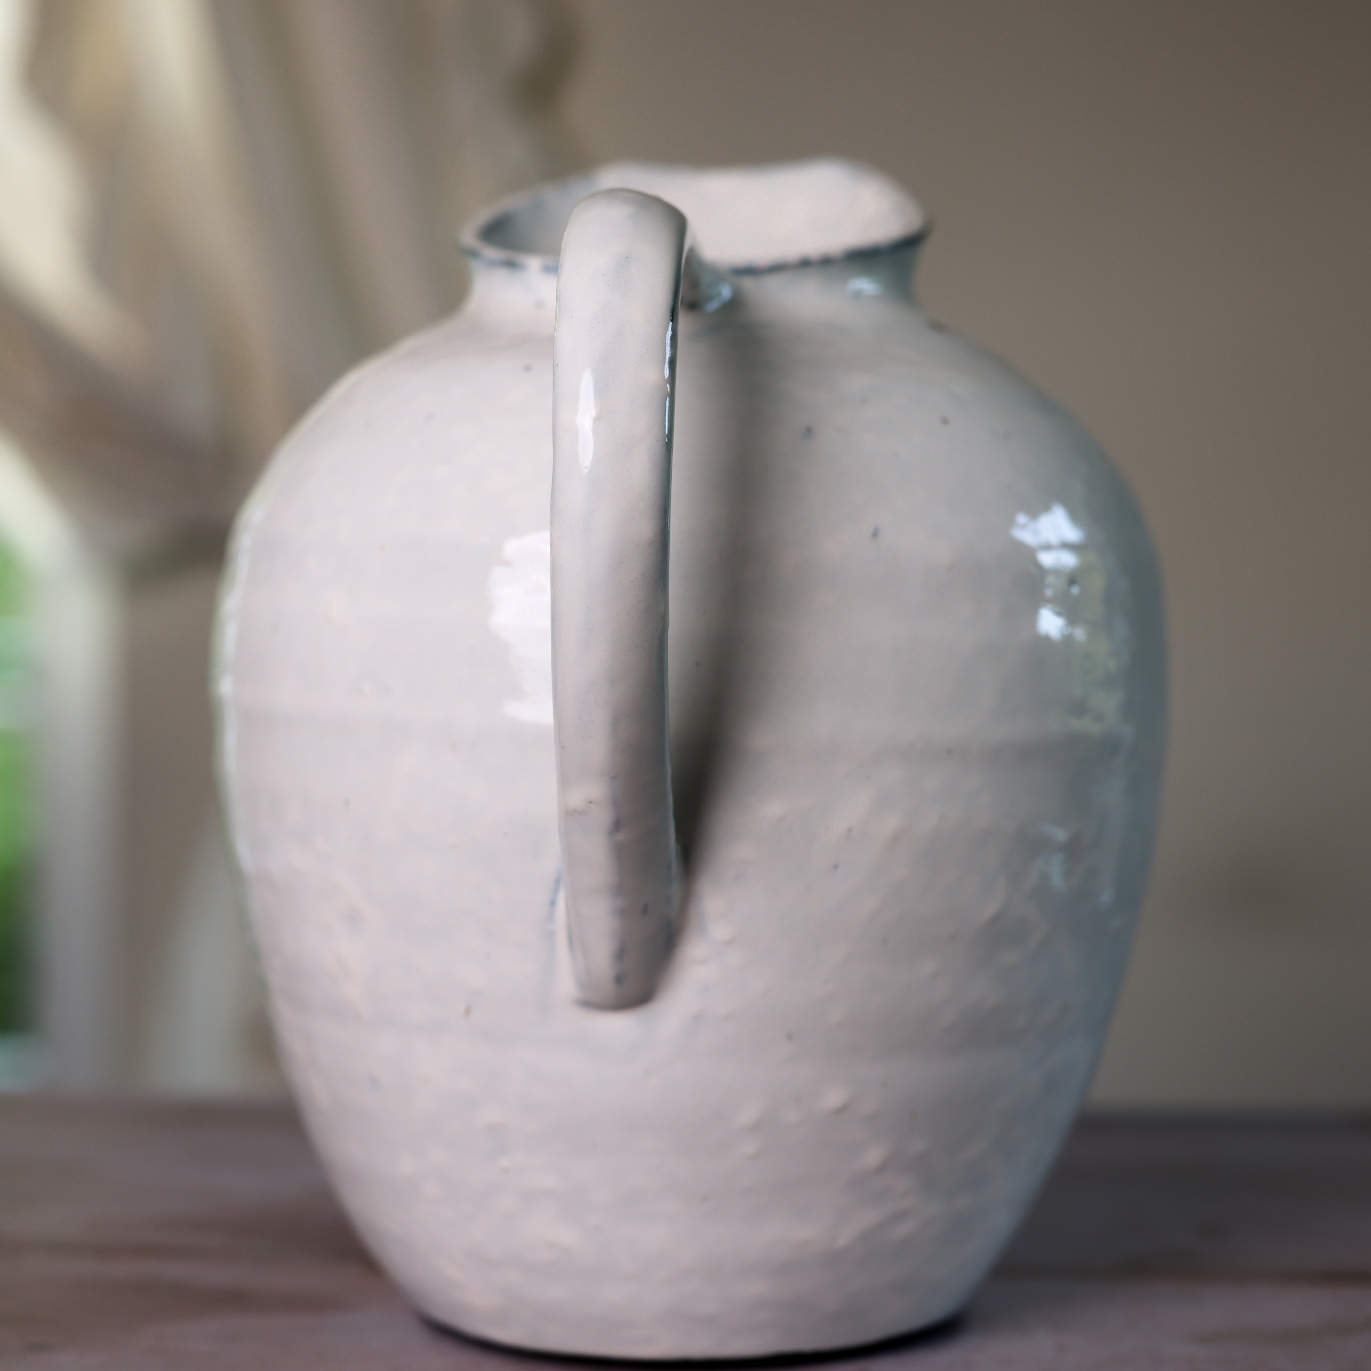 White ceramic vase with blue hued ceramic glaze, handle close up on wooden table.